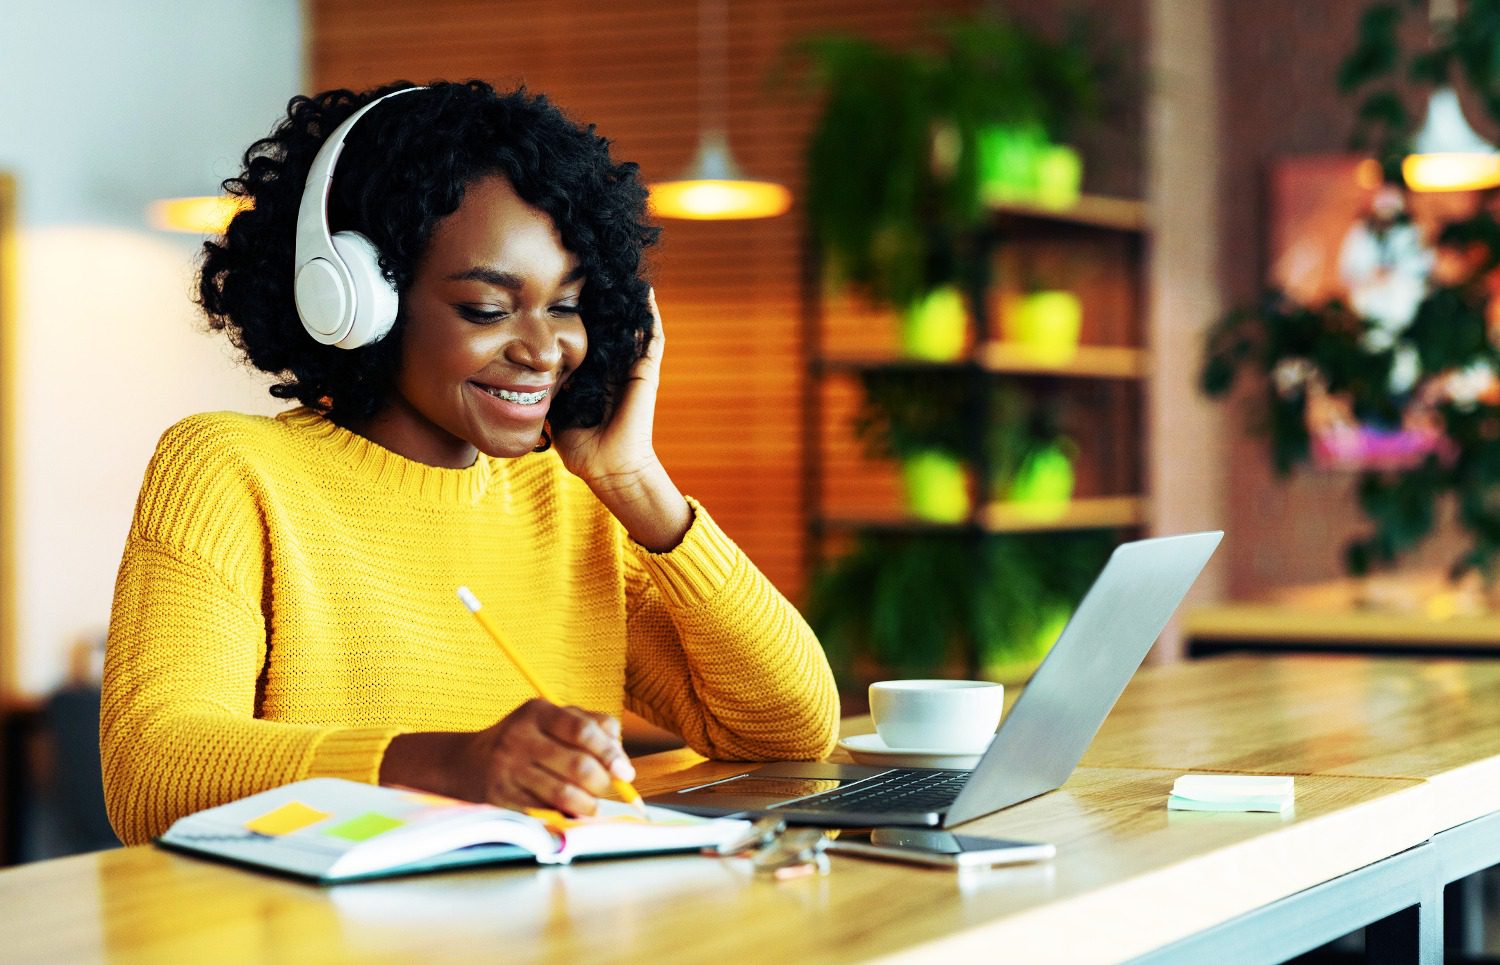 Black woman wearing headphones looking at laptop, smiling, and writing something down.